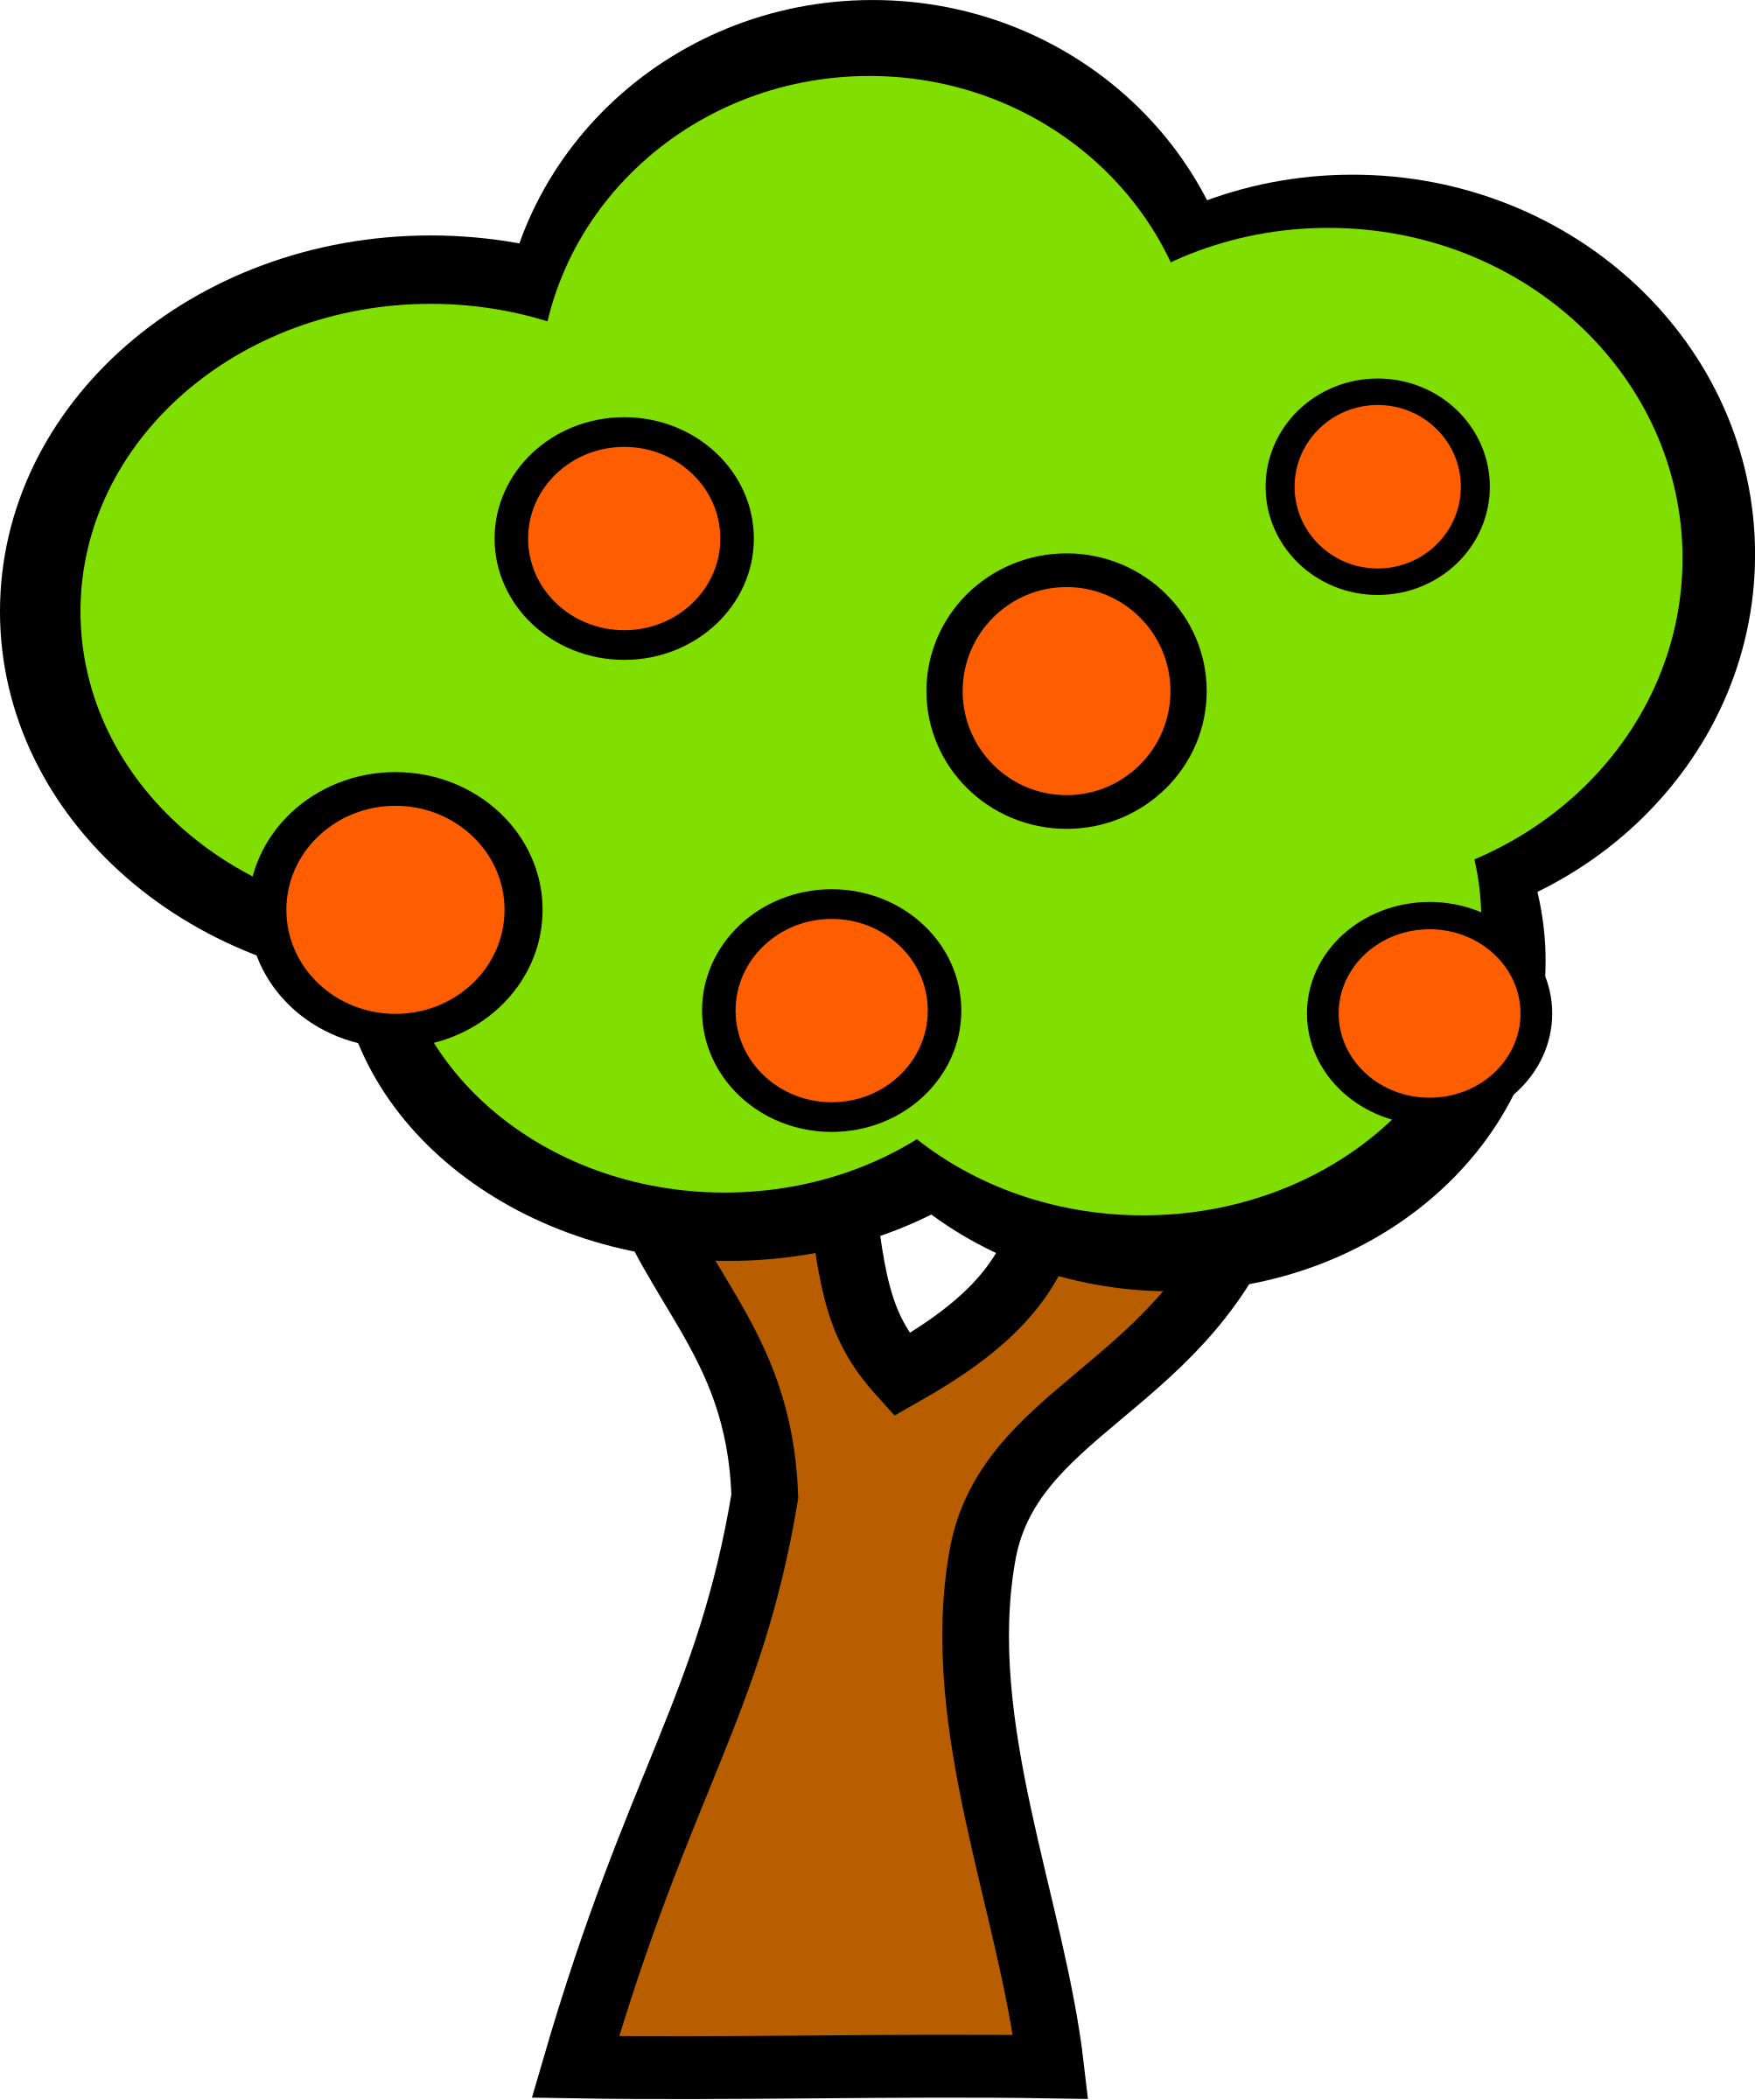 Big Image - Tree With Fruits (2006x2400)